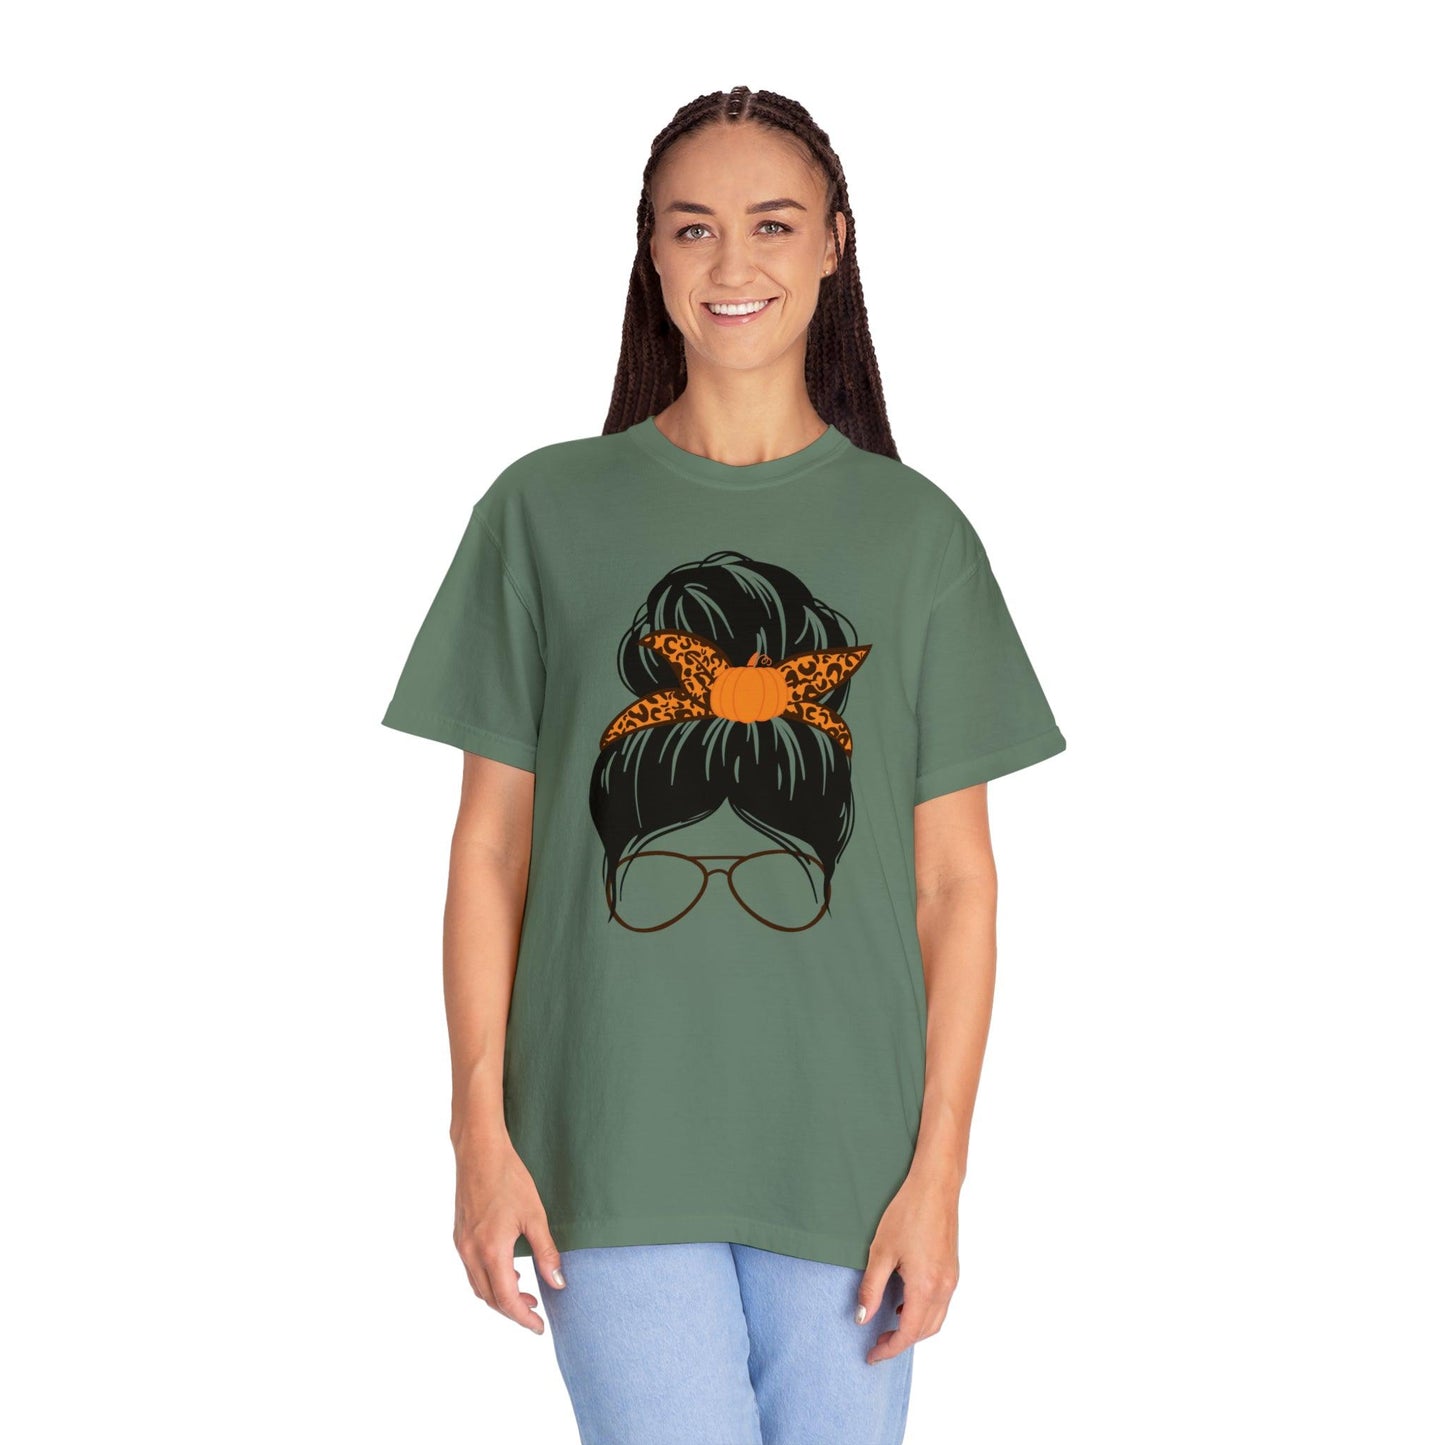 Retro Halloween Tshirt, Trick or Treat shirt, Vintage Shirt Halloween Shirt